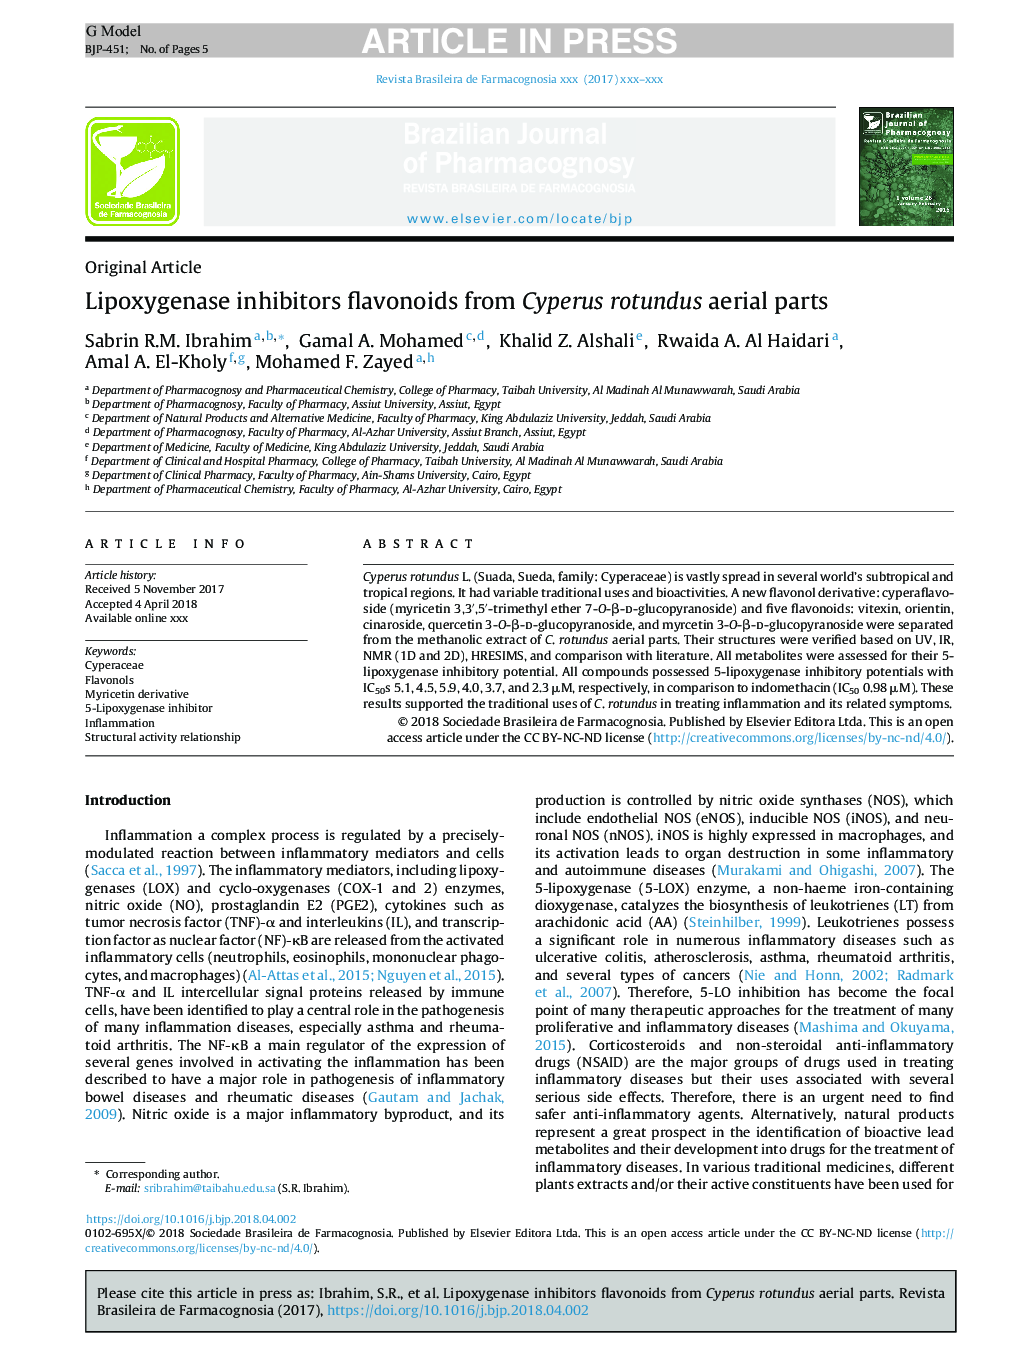 Lipoxygenase inhibitors flavonoids from Cyperus rotundus aerial parts